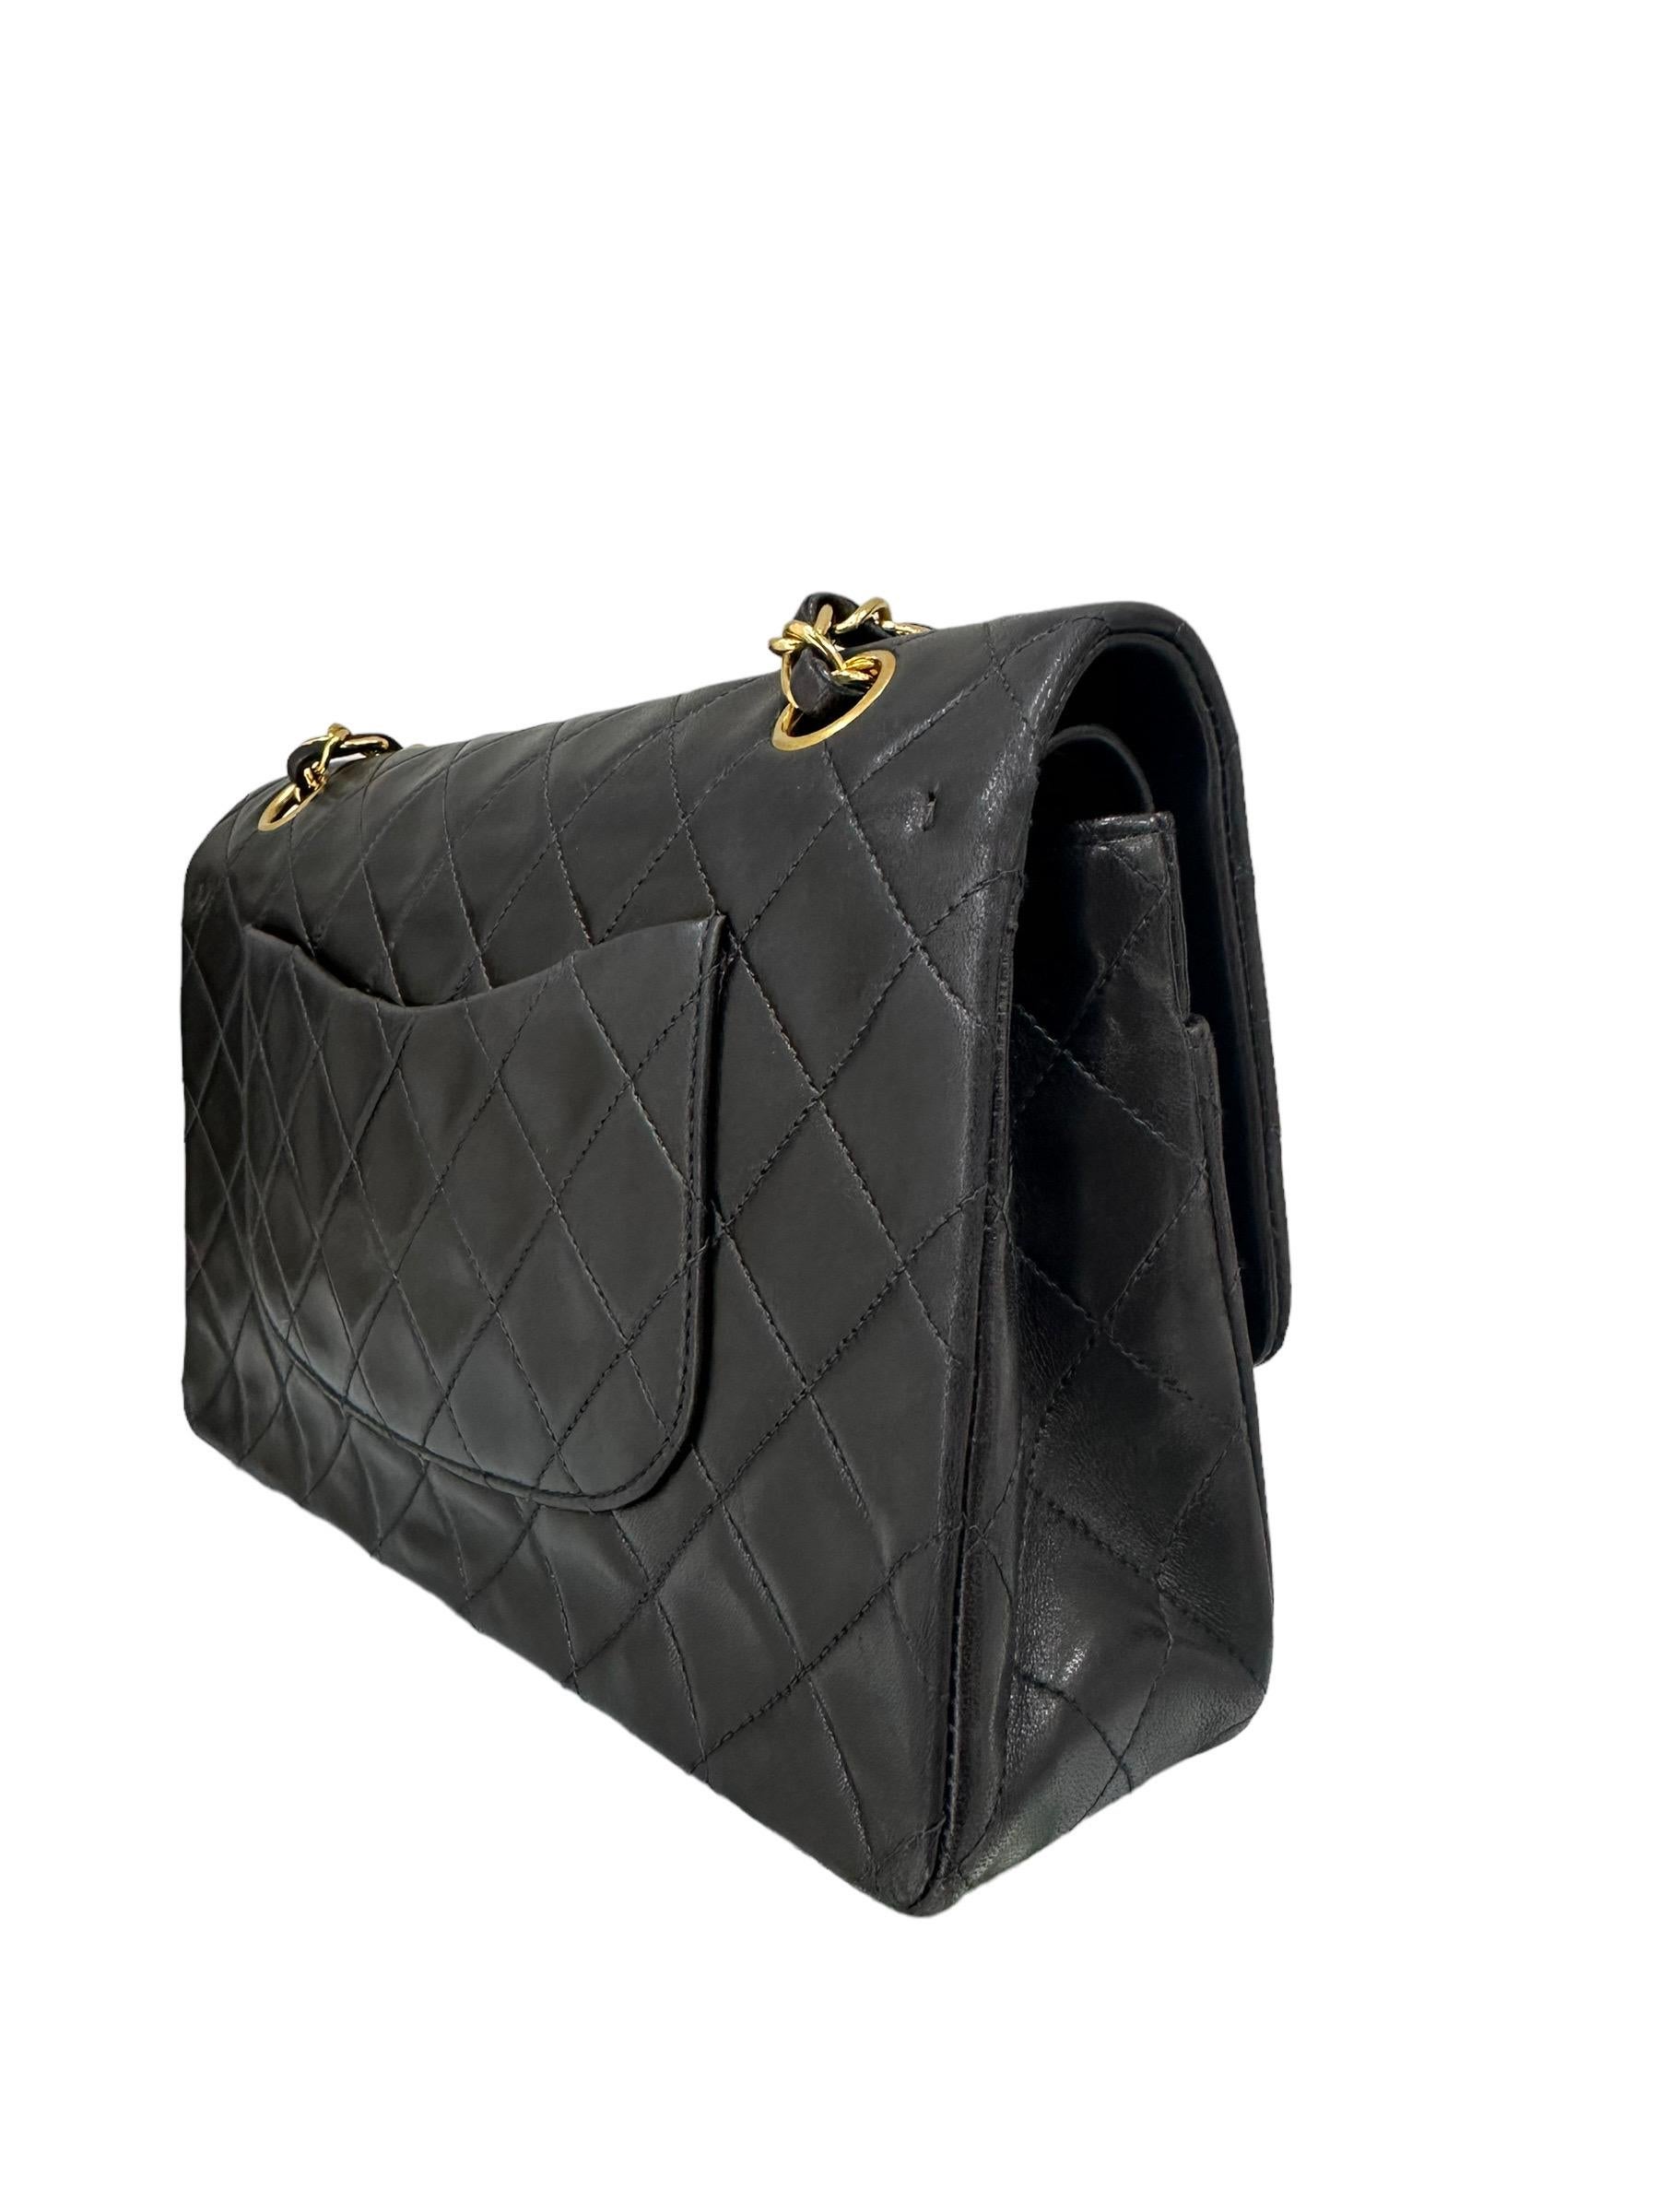 1996 Chanel Timeless Classic 2.55 Black Leather Top Shoulder Bag For Sale 6